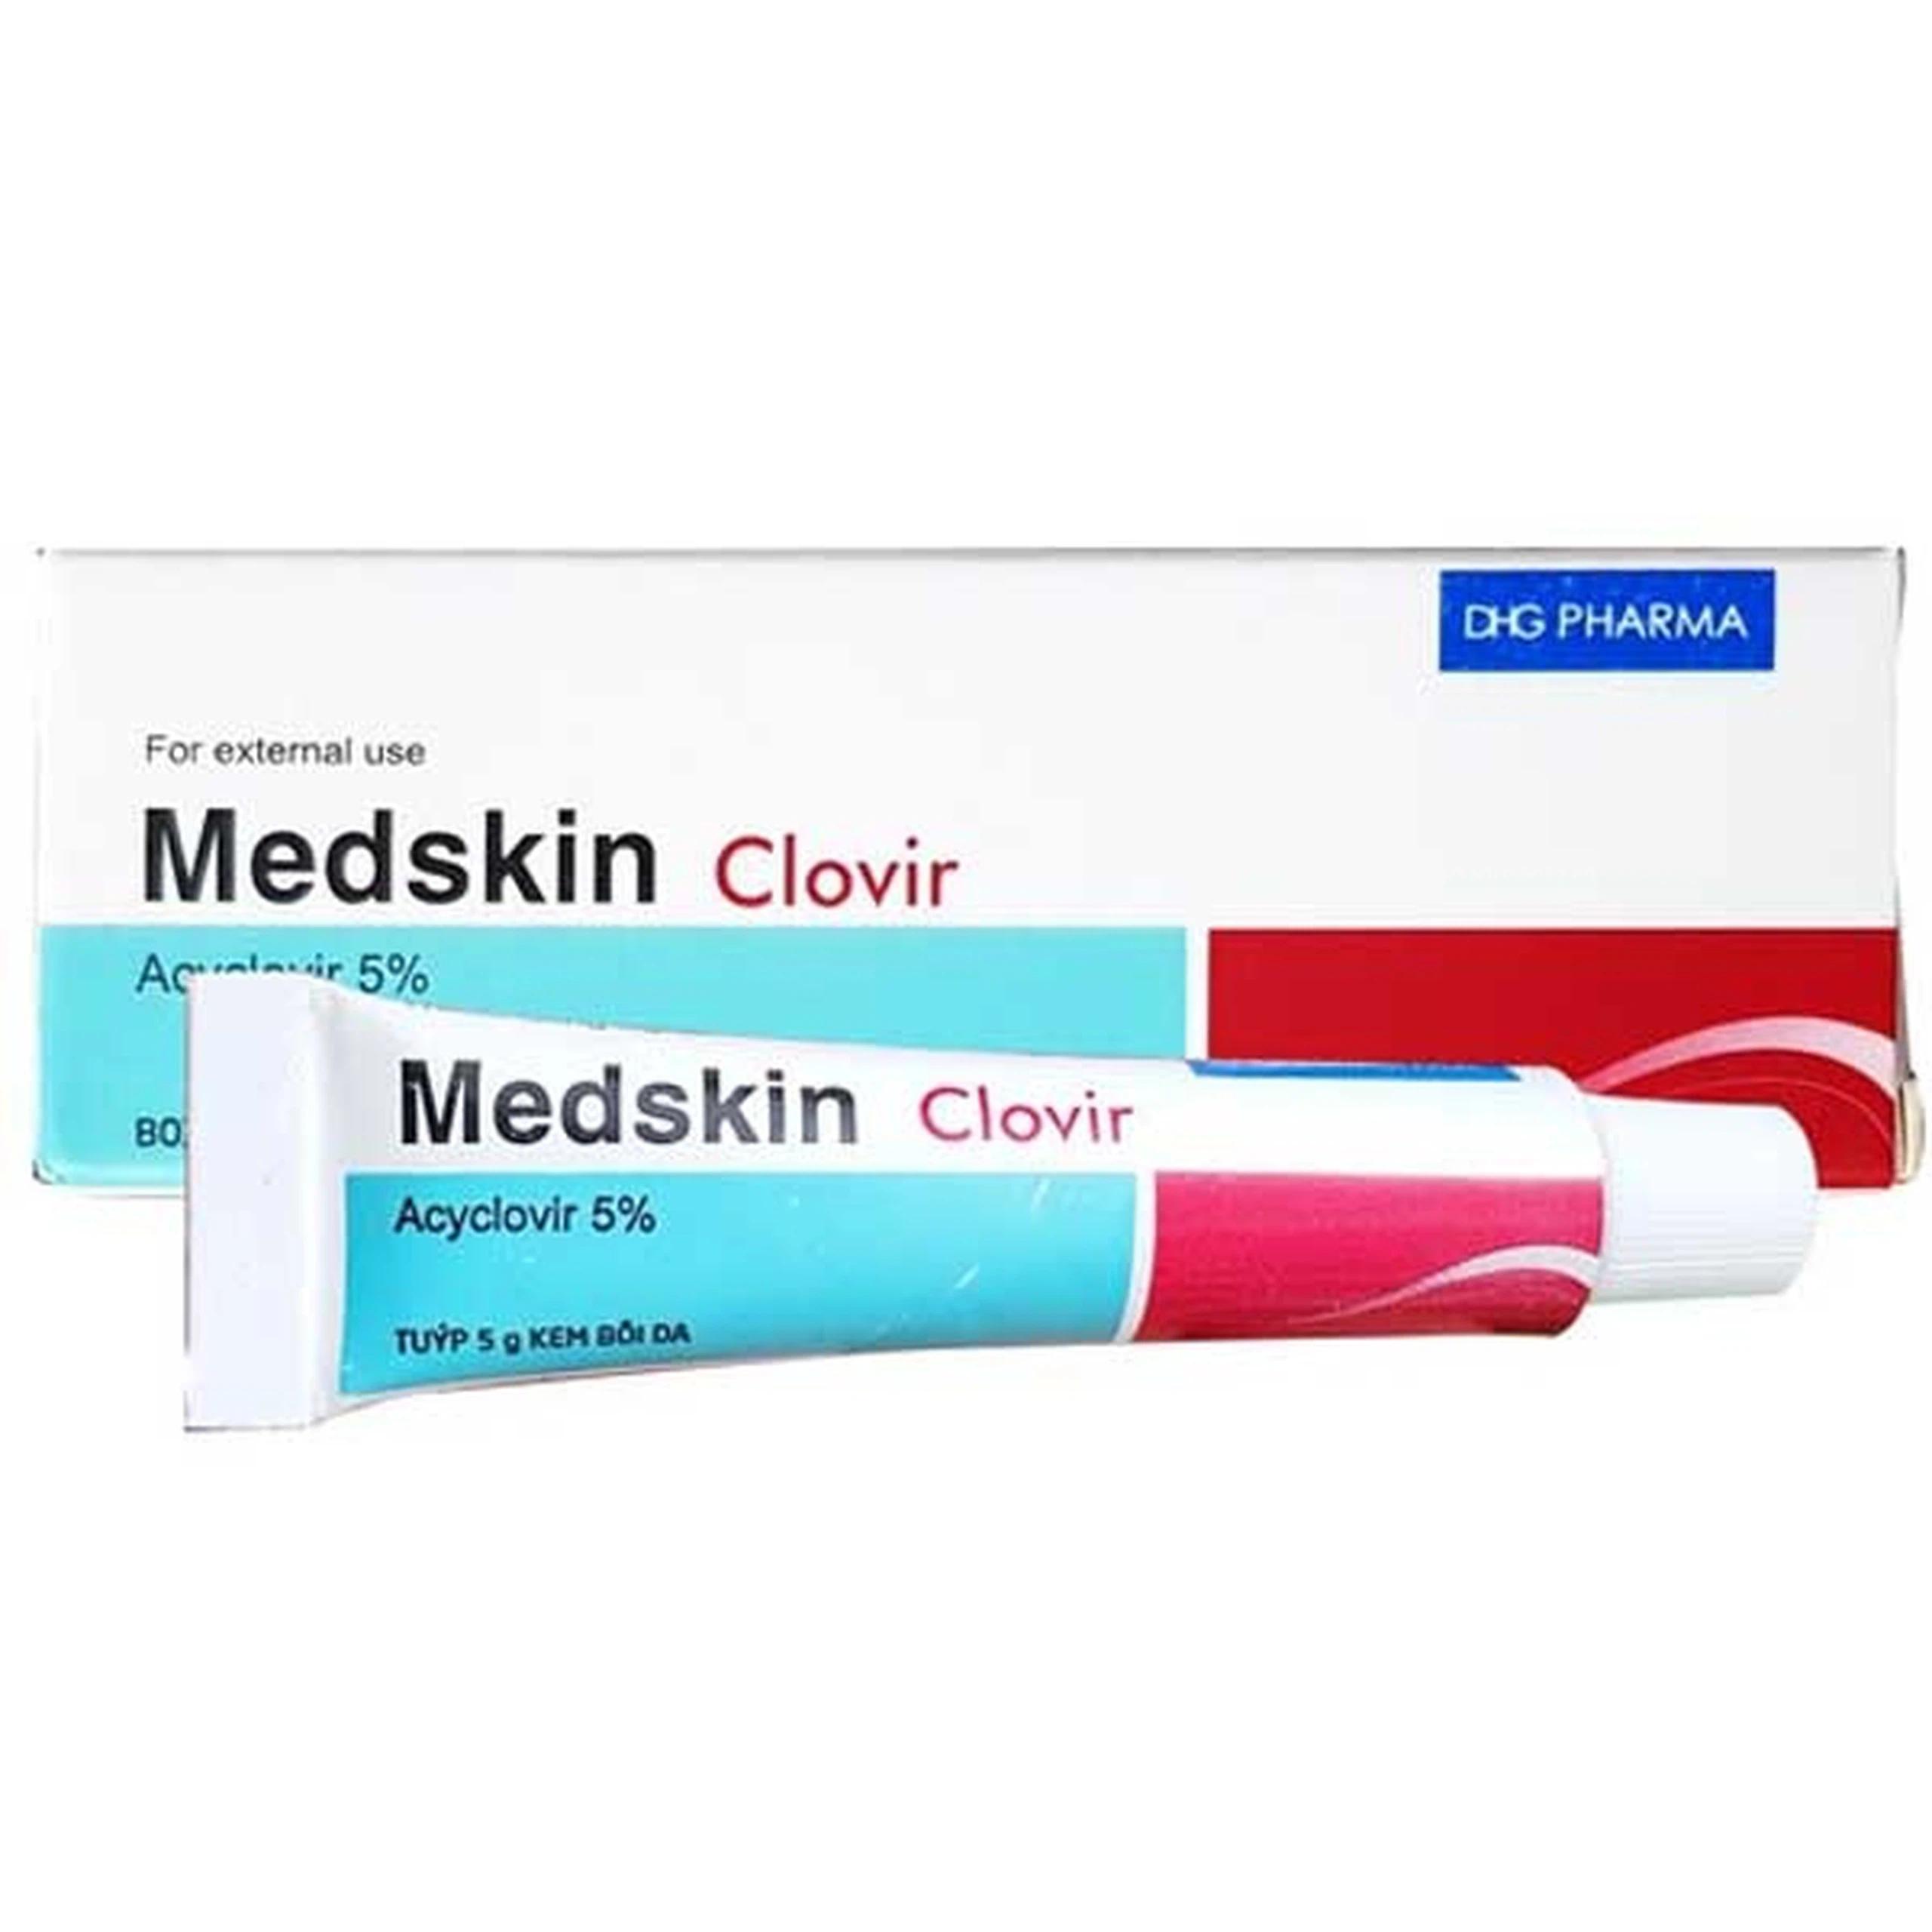 Kem bôi da Medskin Clovir 5% DHG Pharma điều trị nhiễm trùng Herpes simplex (5g)